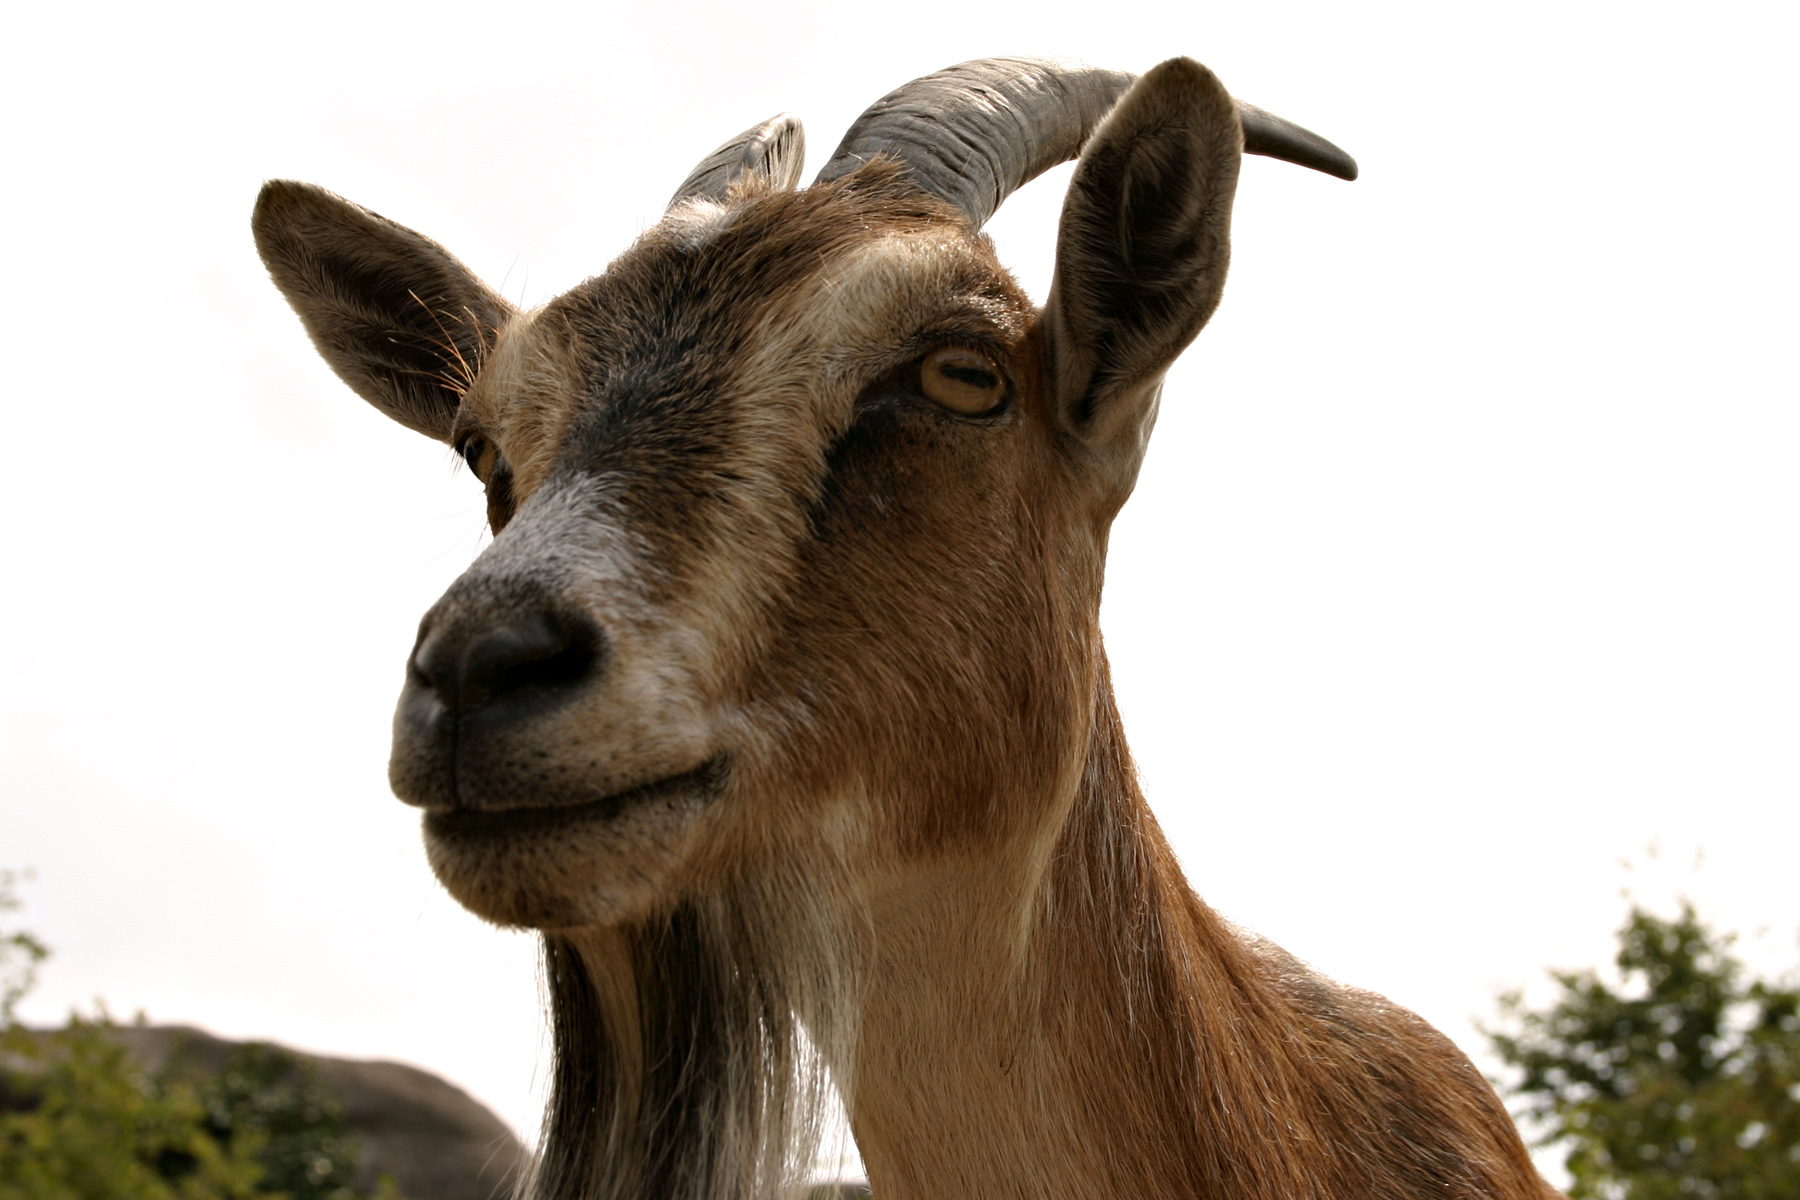 Goat closeup photo